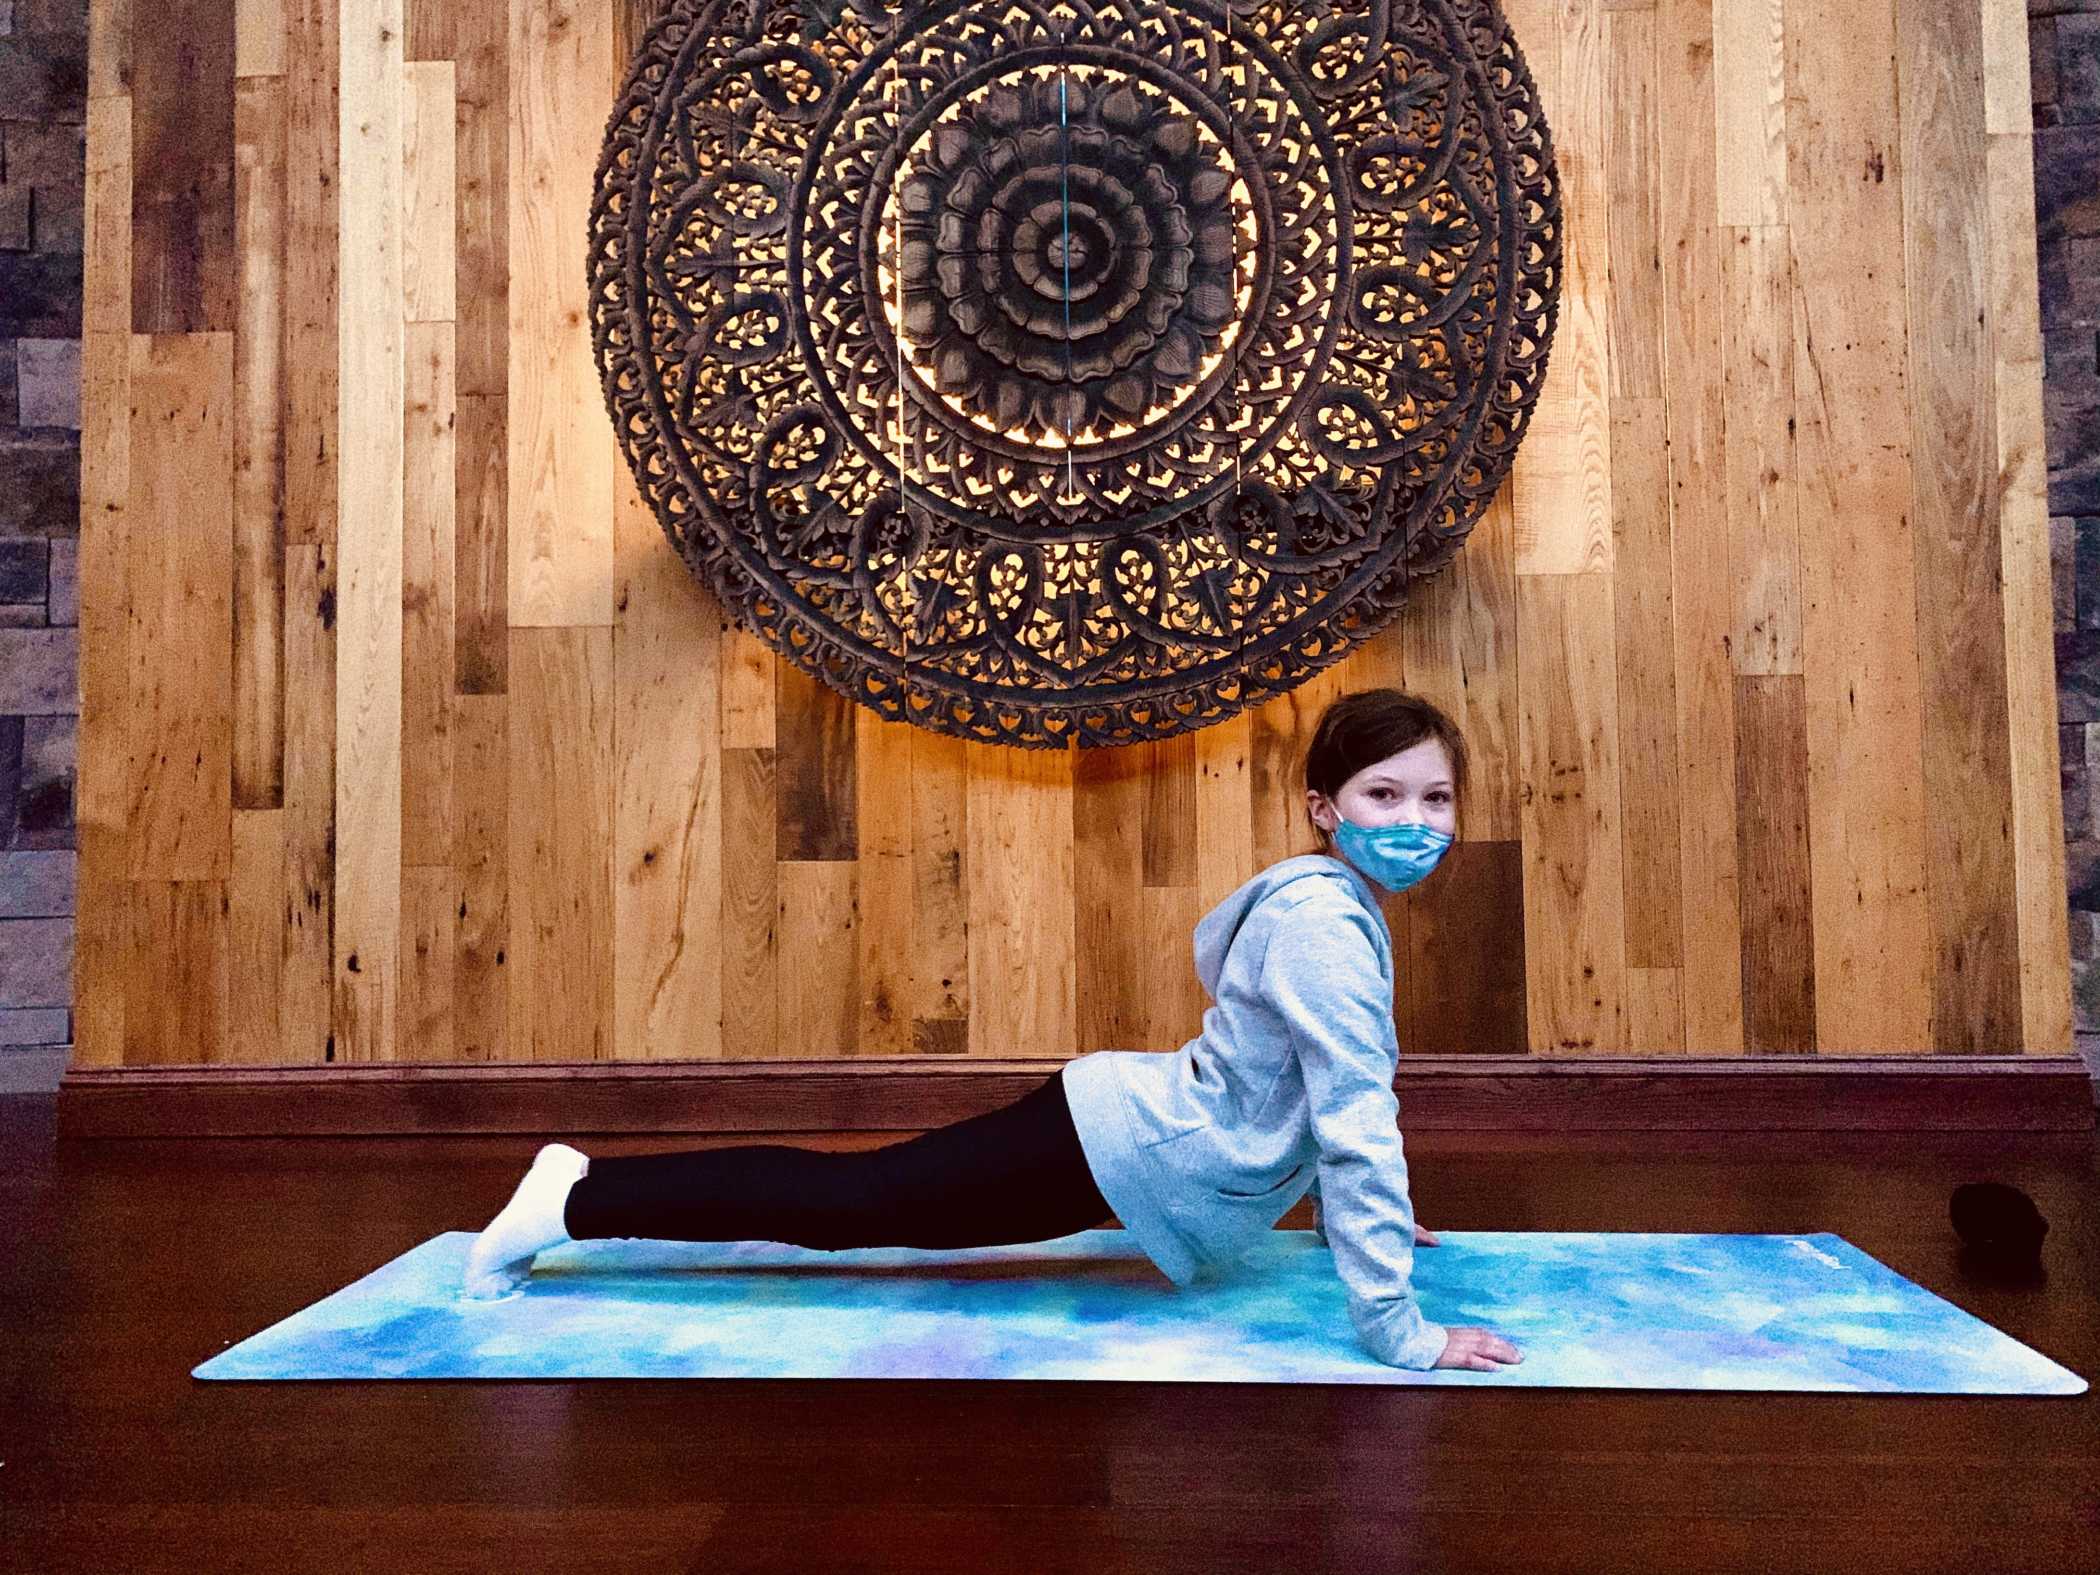 partner yoga poses tumblr